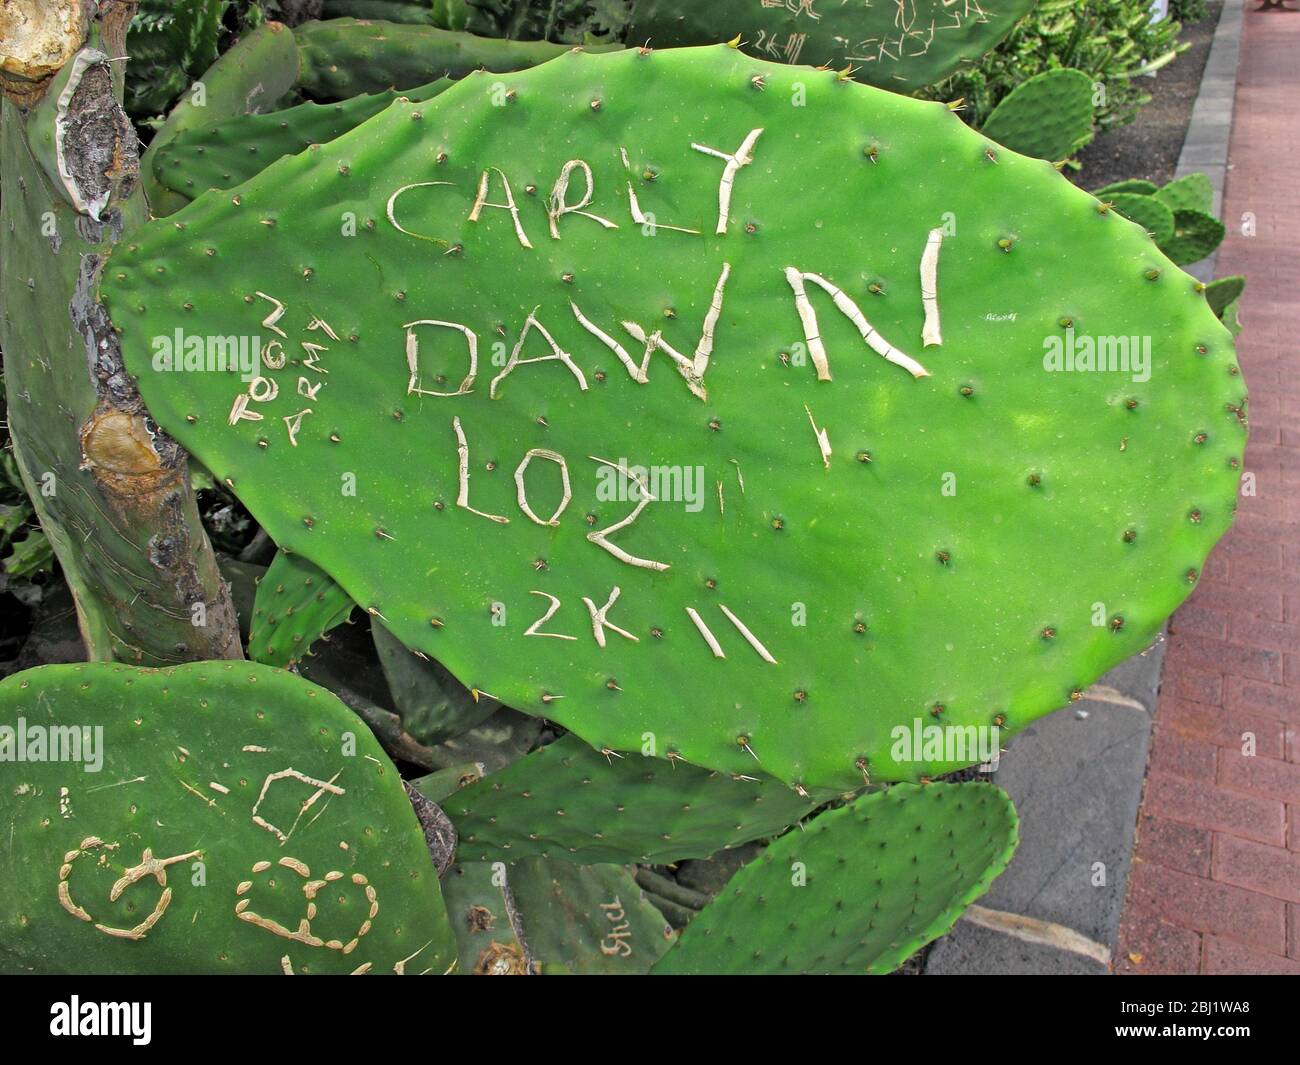 Carly Dawn, Toon Army, Loz, 2k11, geschnitzt, auf Kaktus, Graffiti Stockfoto